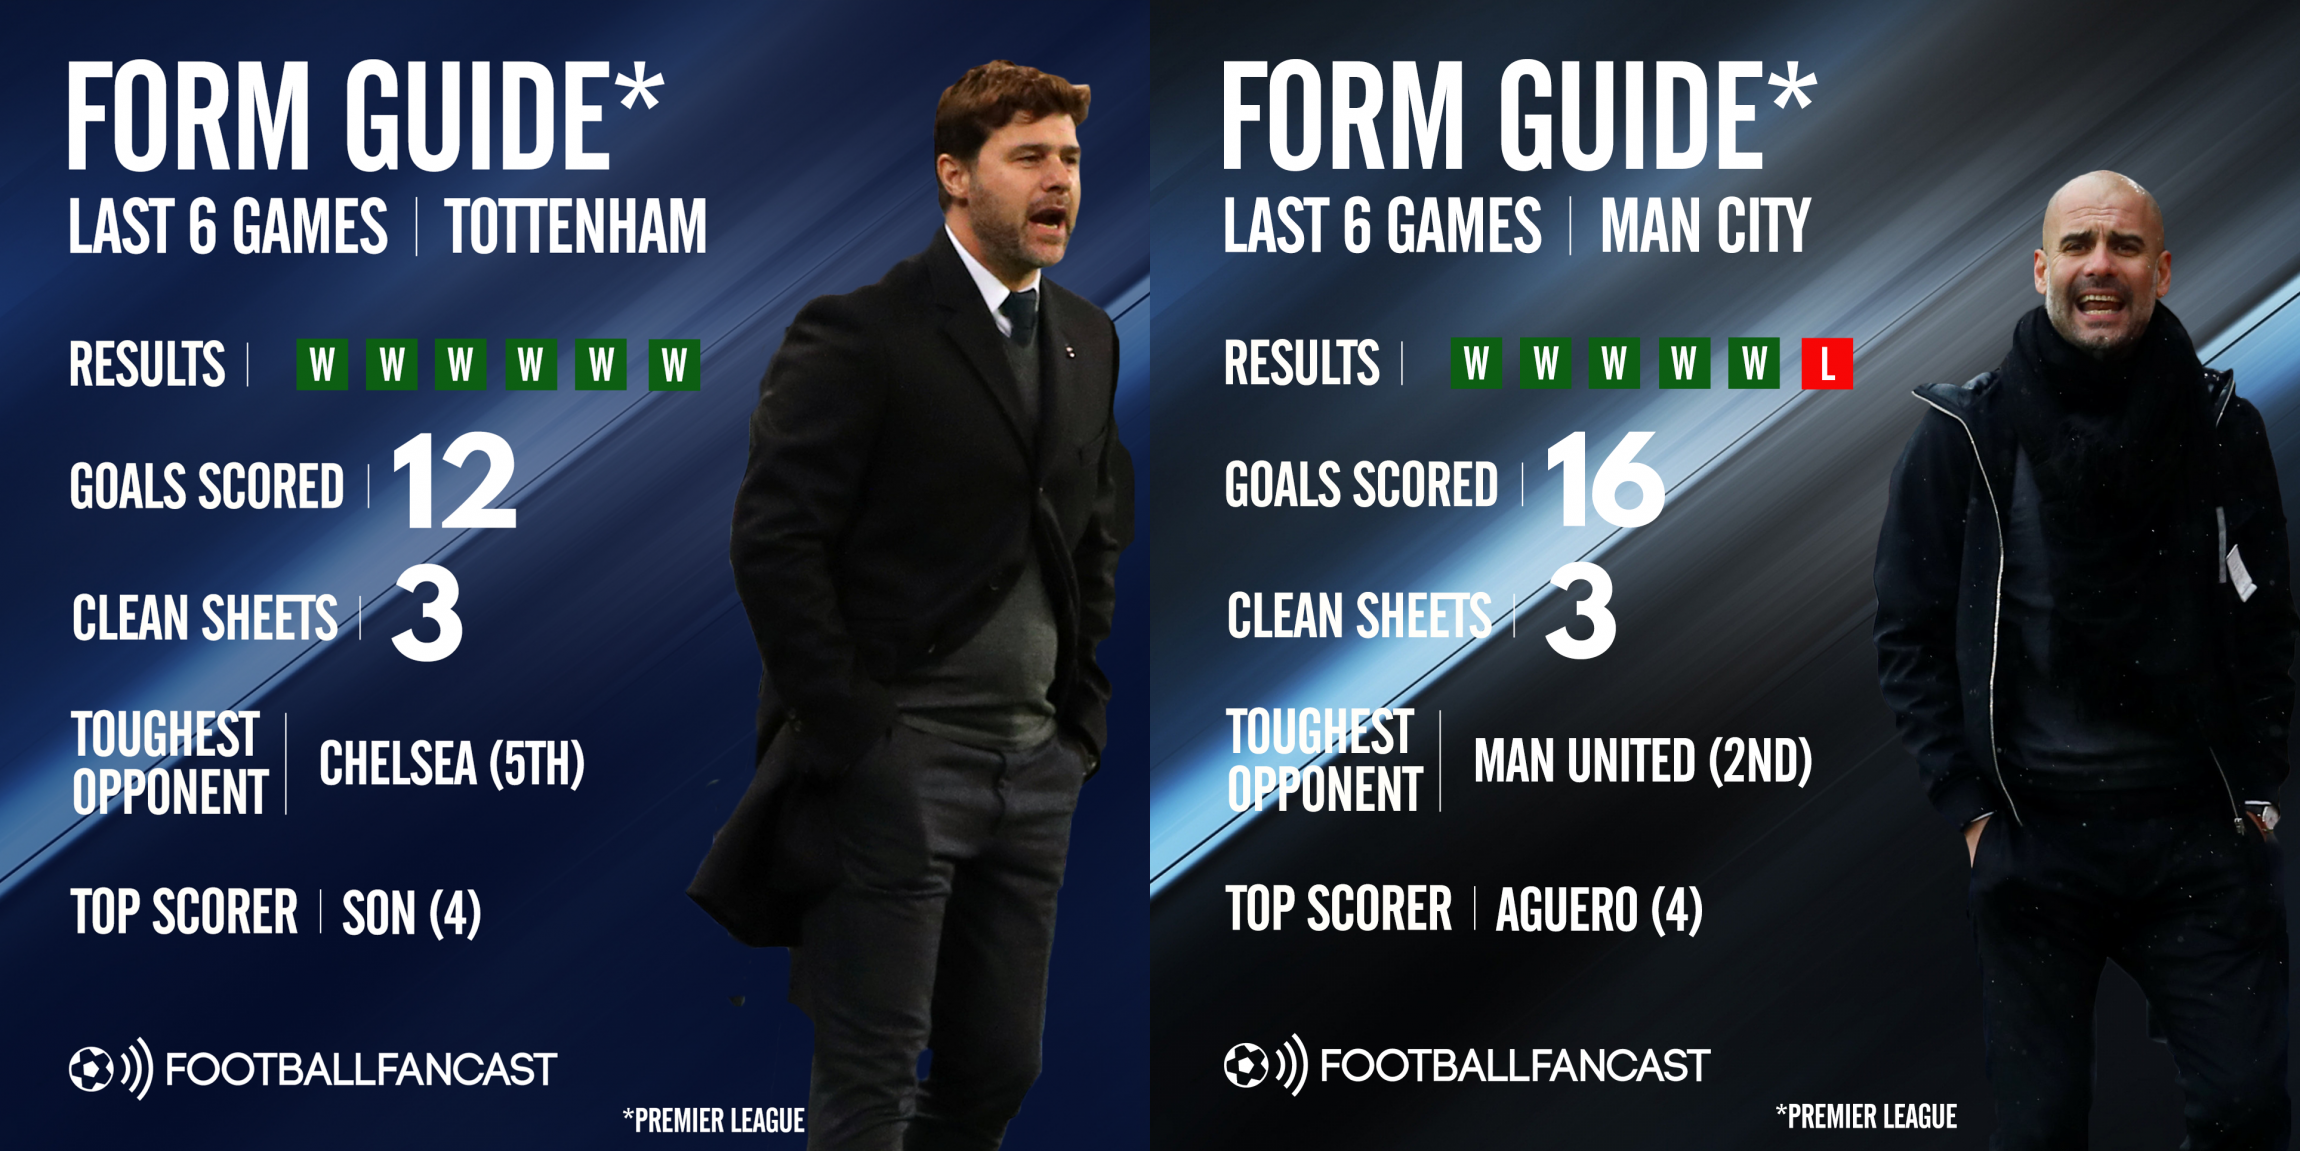 Tottenham vs Manchester City - Form Guide